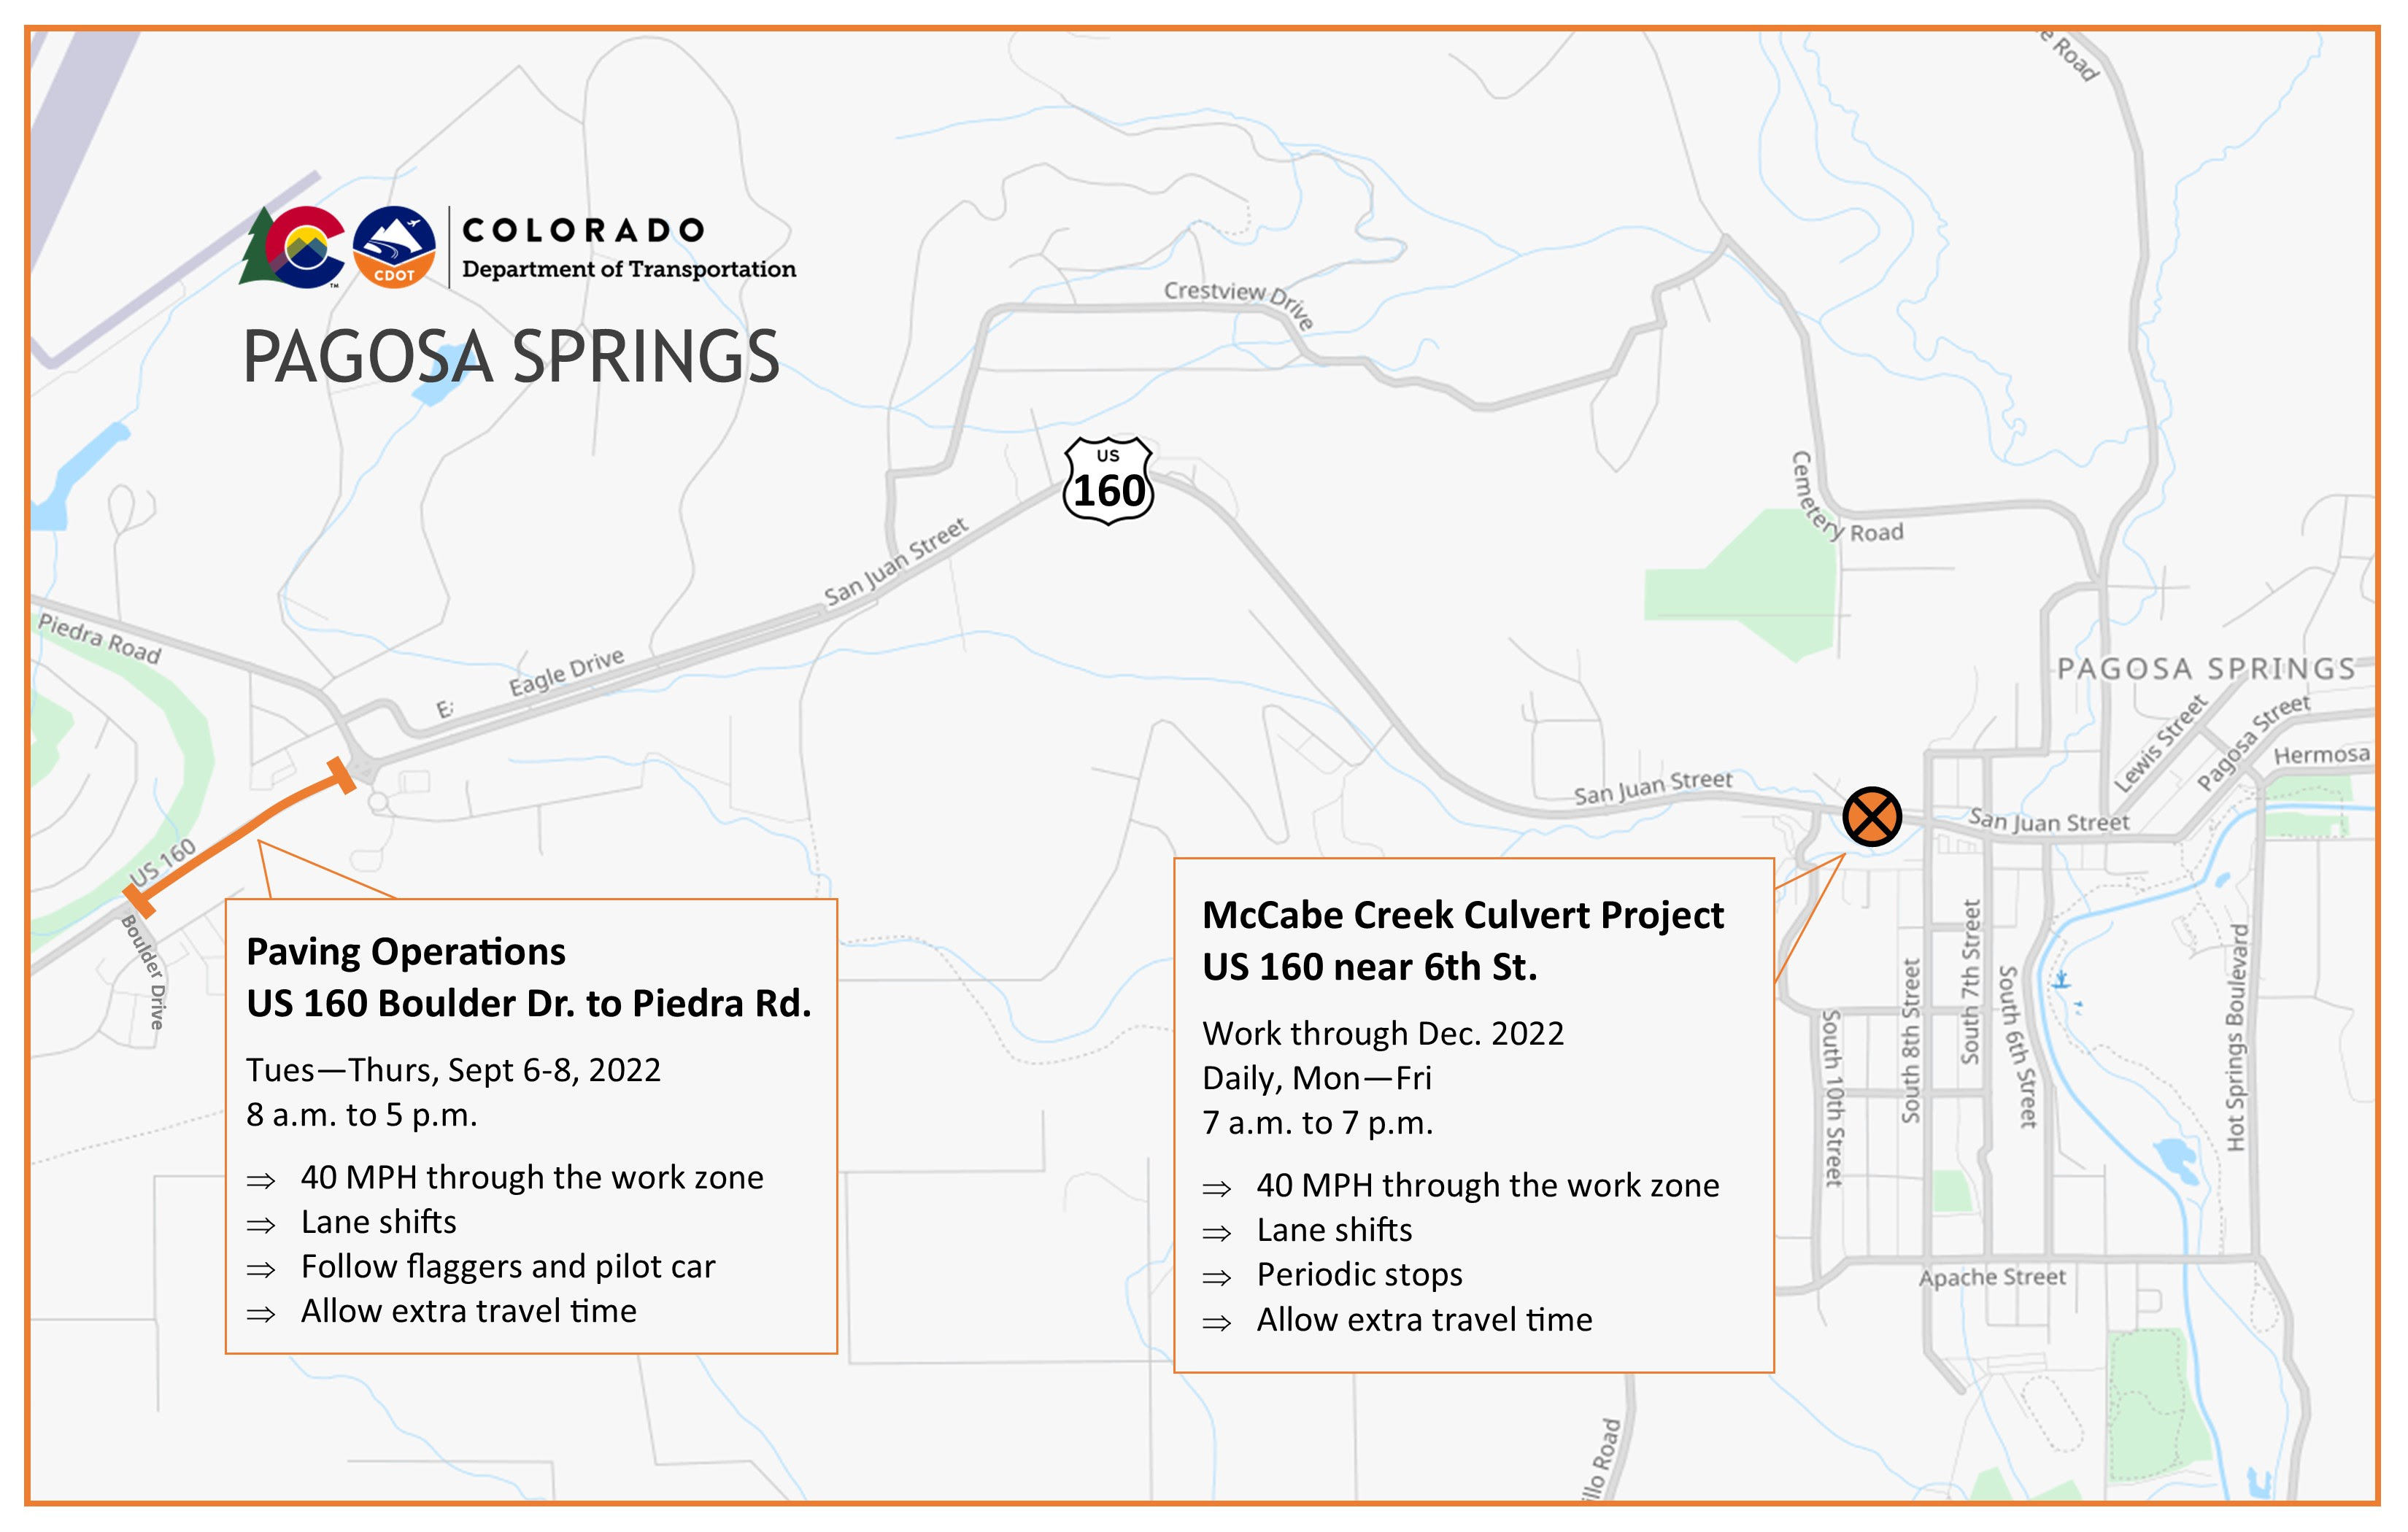 US 160 Mccabe Creek project travel impact map.jpg detail image